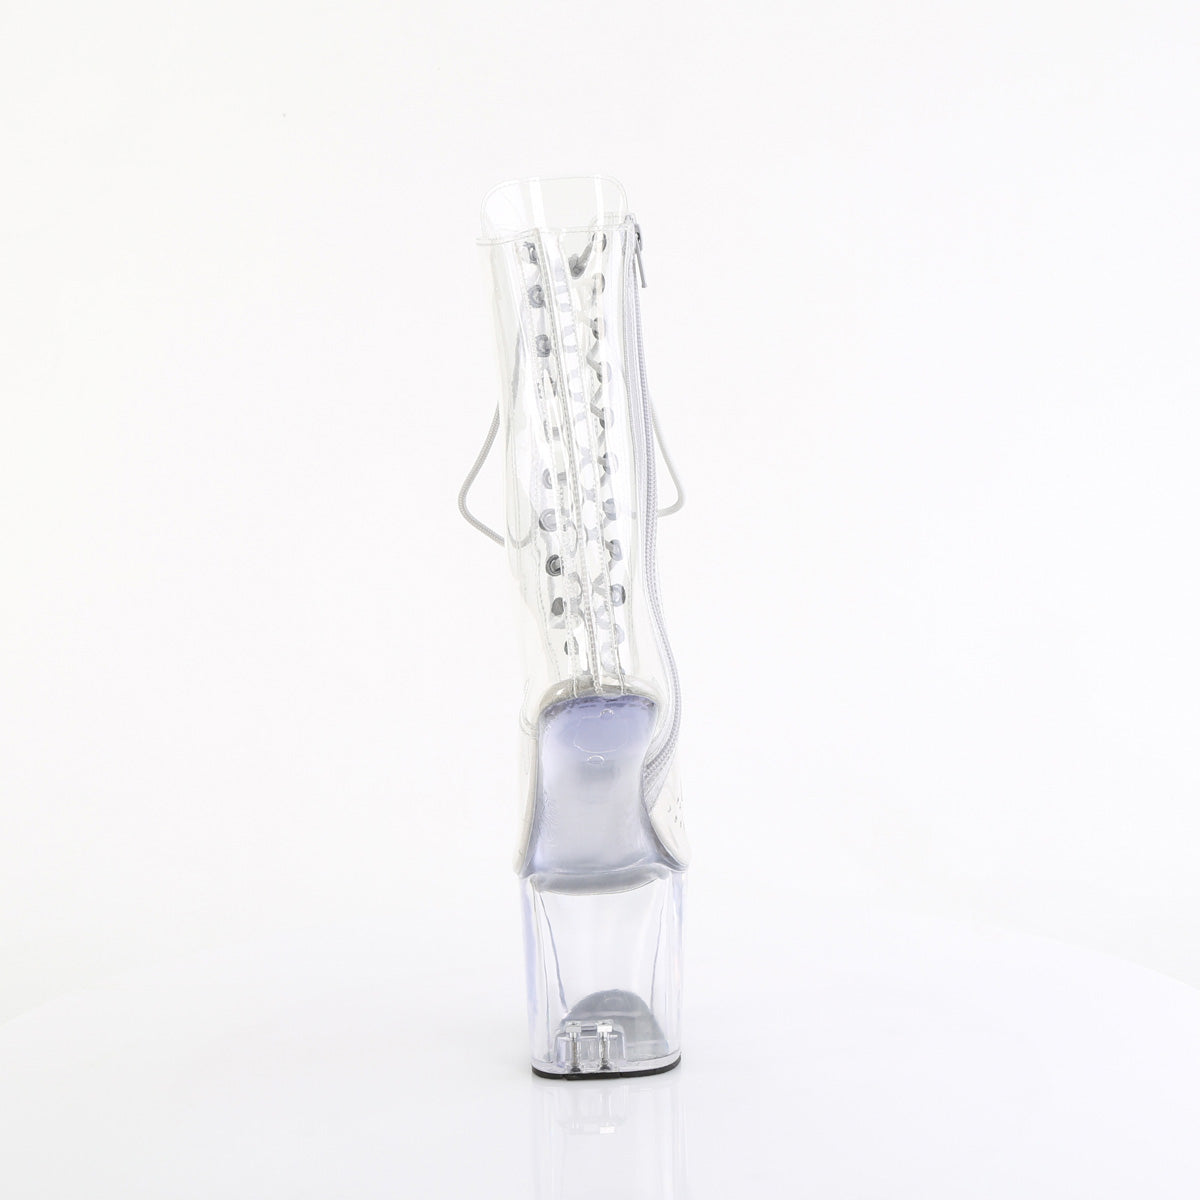 CRAZE-1040C Pleaser Ankle/Mid-Calf Boots Transparent Platforms (Exotic Dancing)